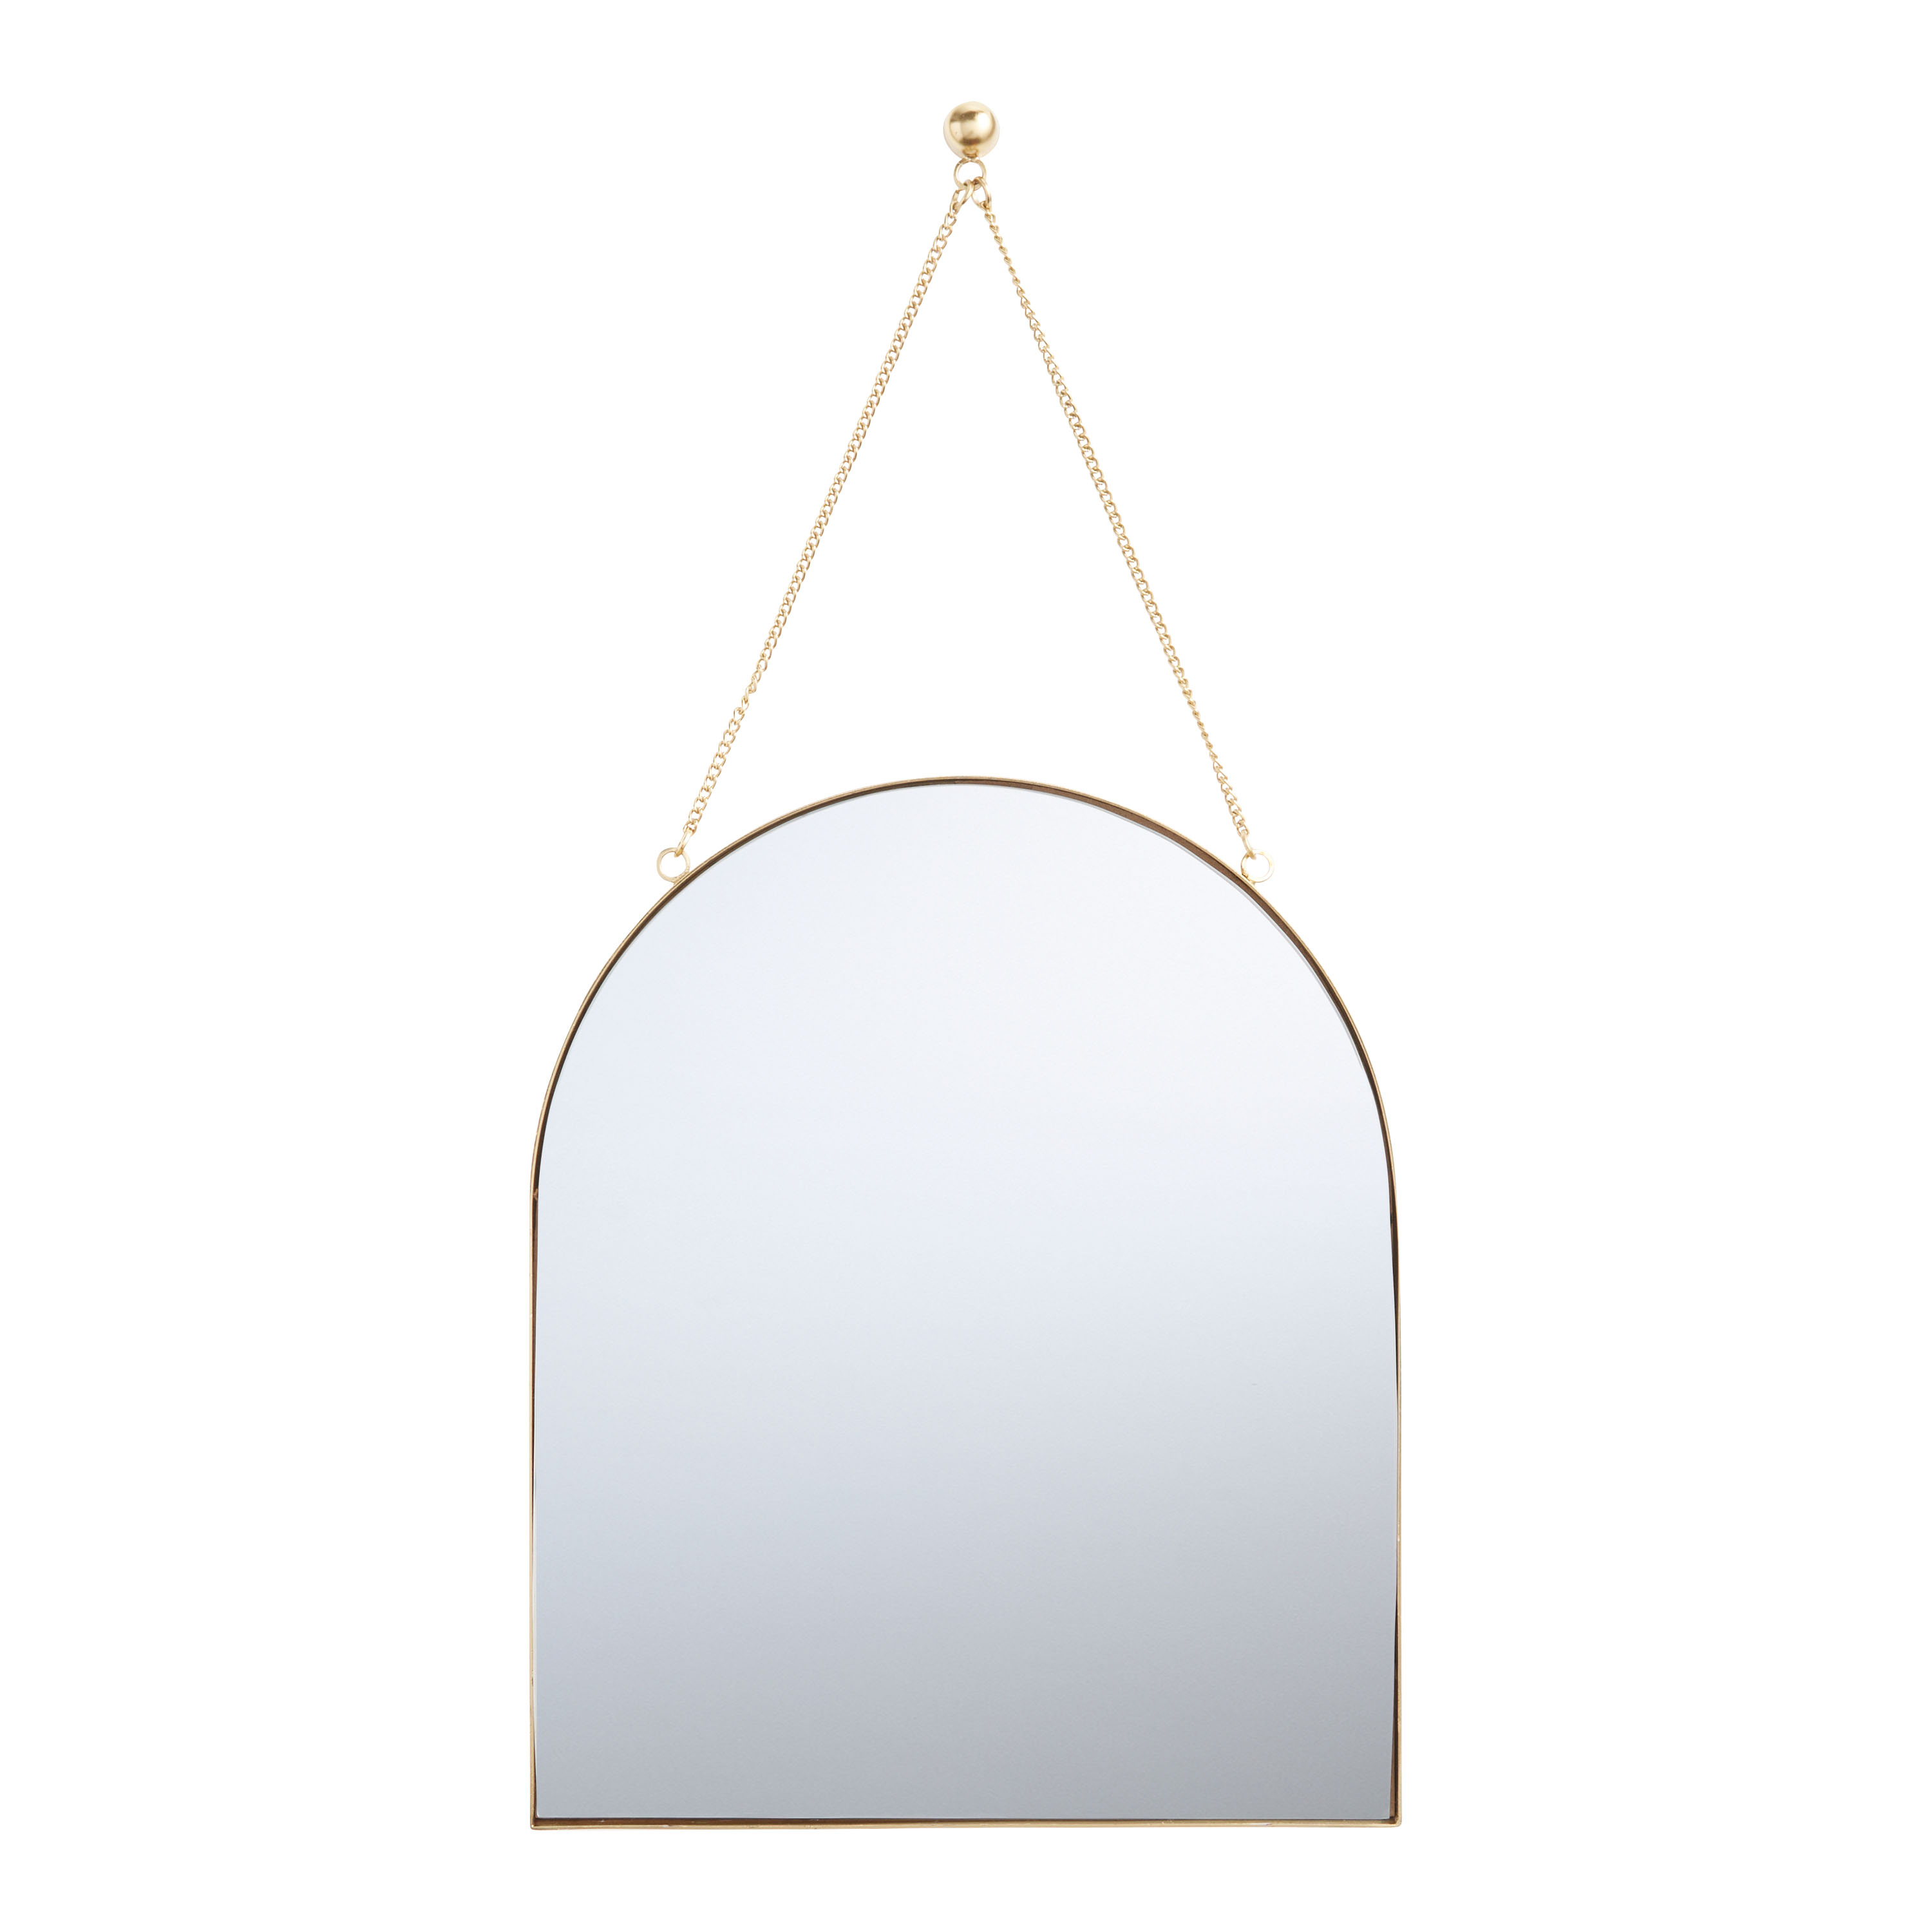 Decor On a Budget: DIY $500 Geometric Mirror For Less Than $50